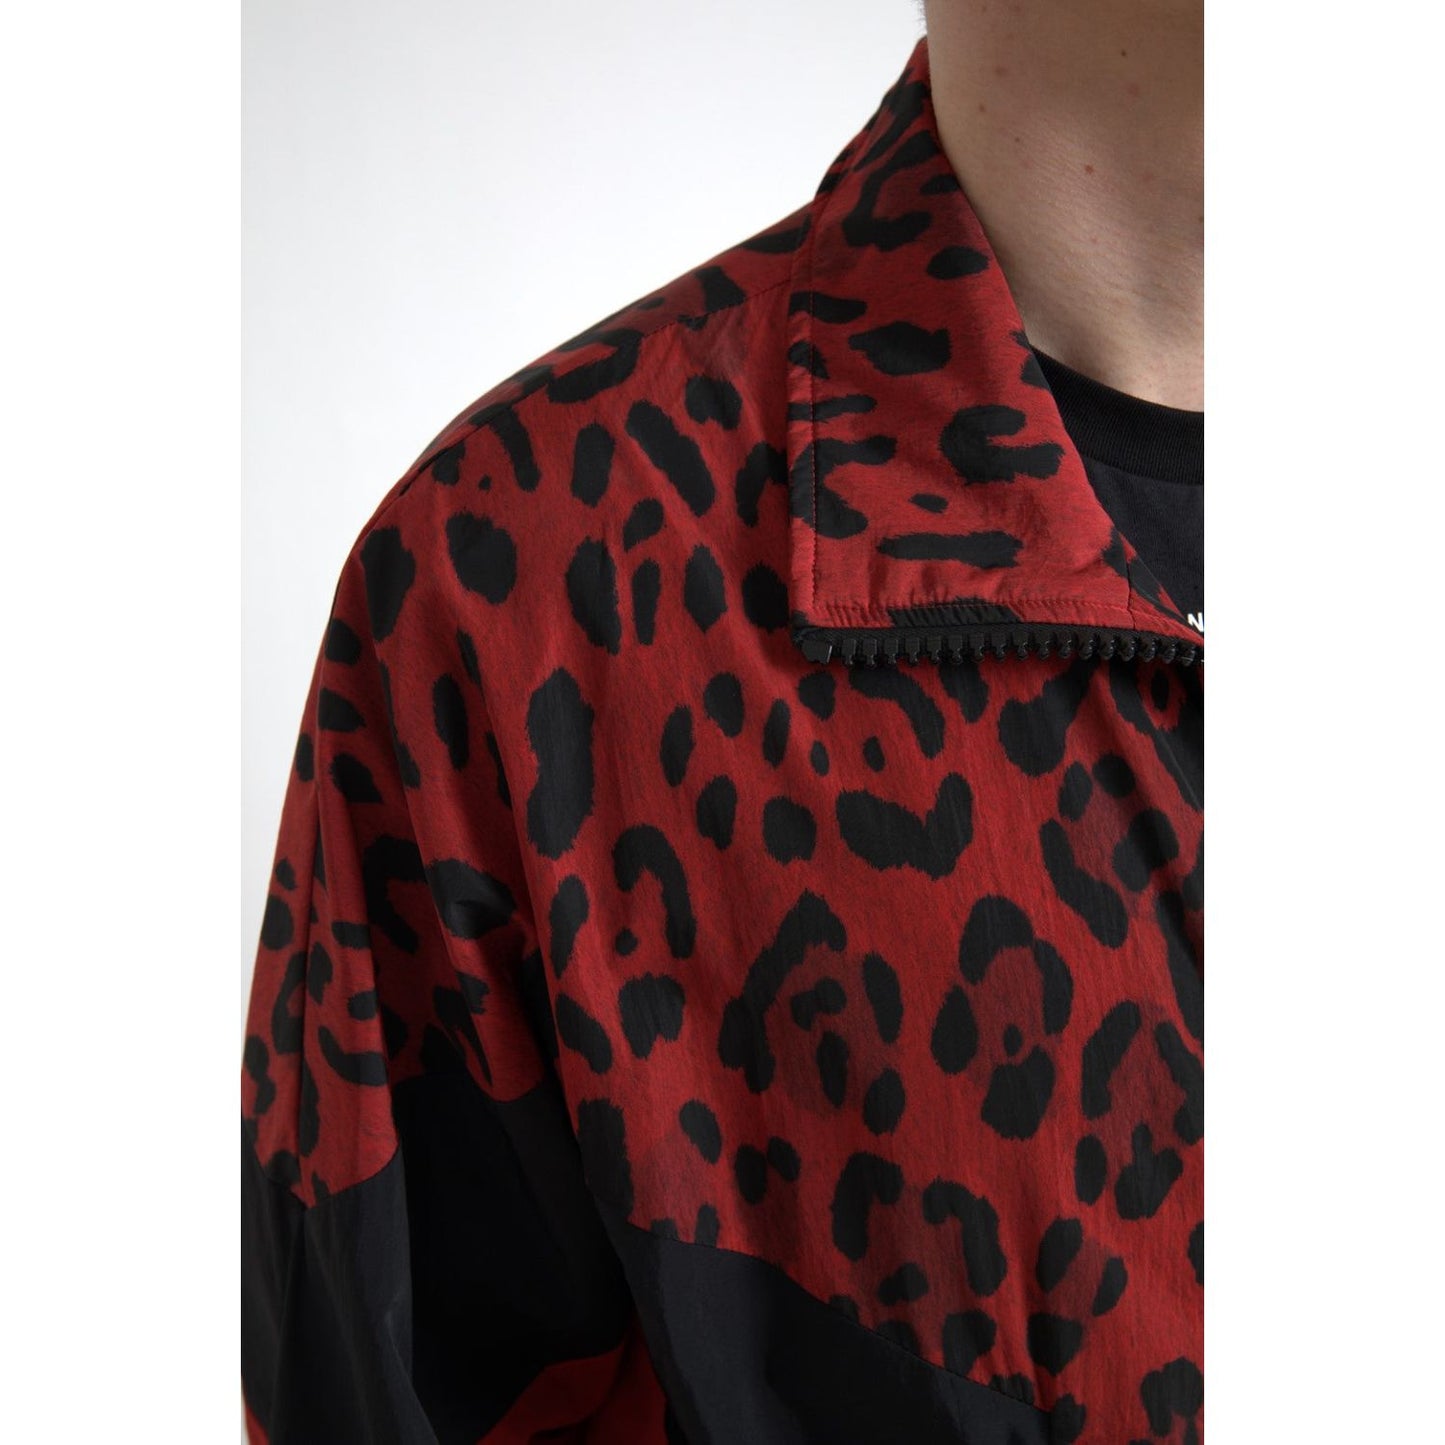 Dolce & Gabbana Red Leopard Zip Sweater Jacket red-leopard-nylon-full-zip-sweater